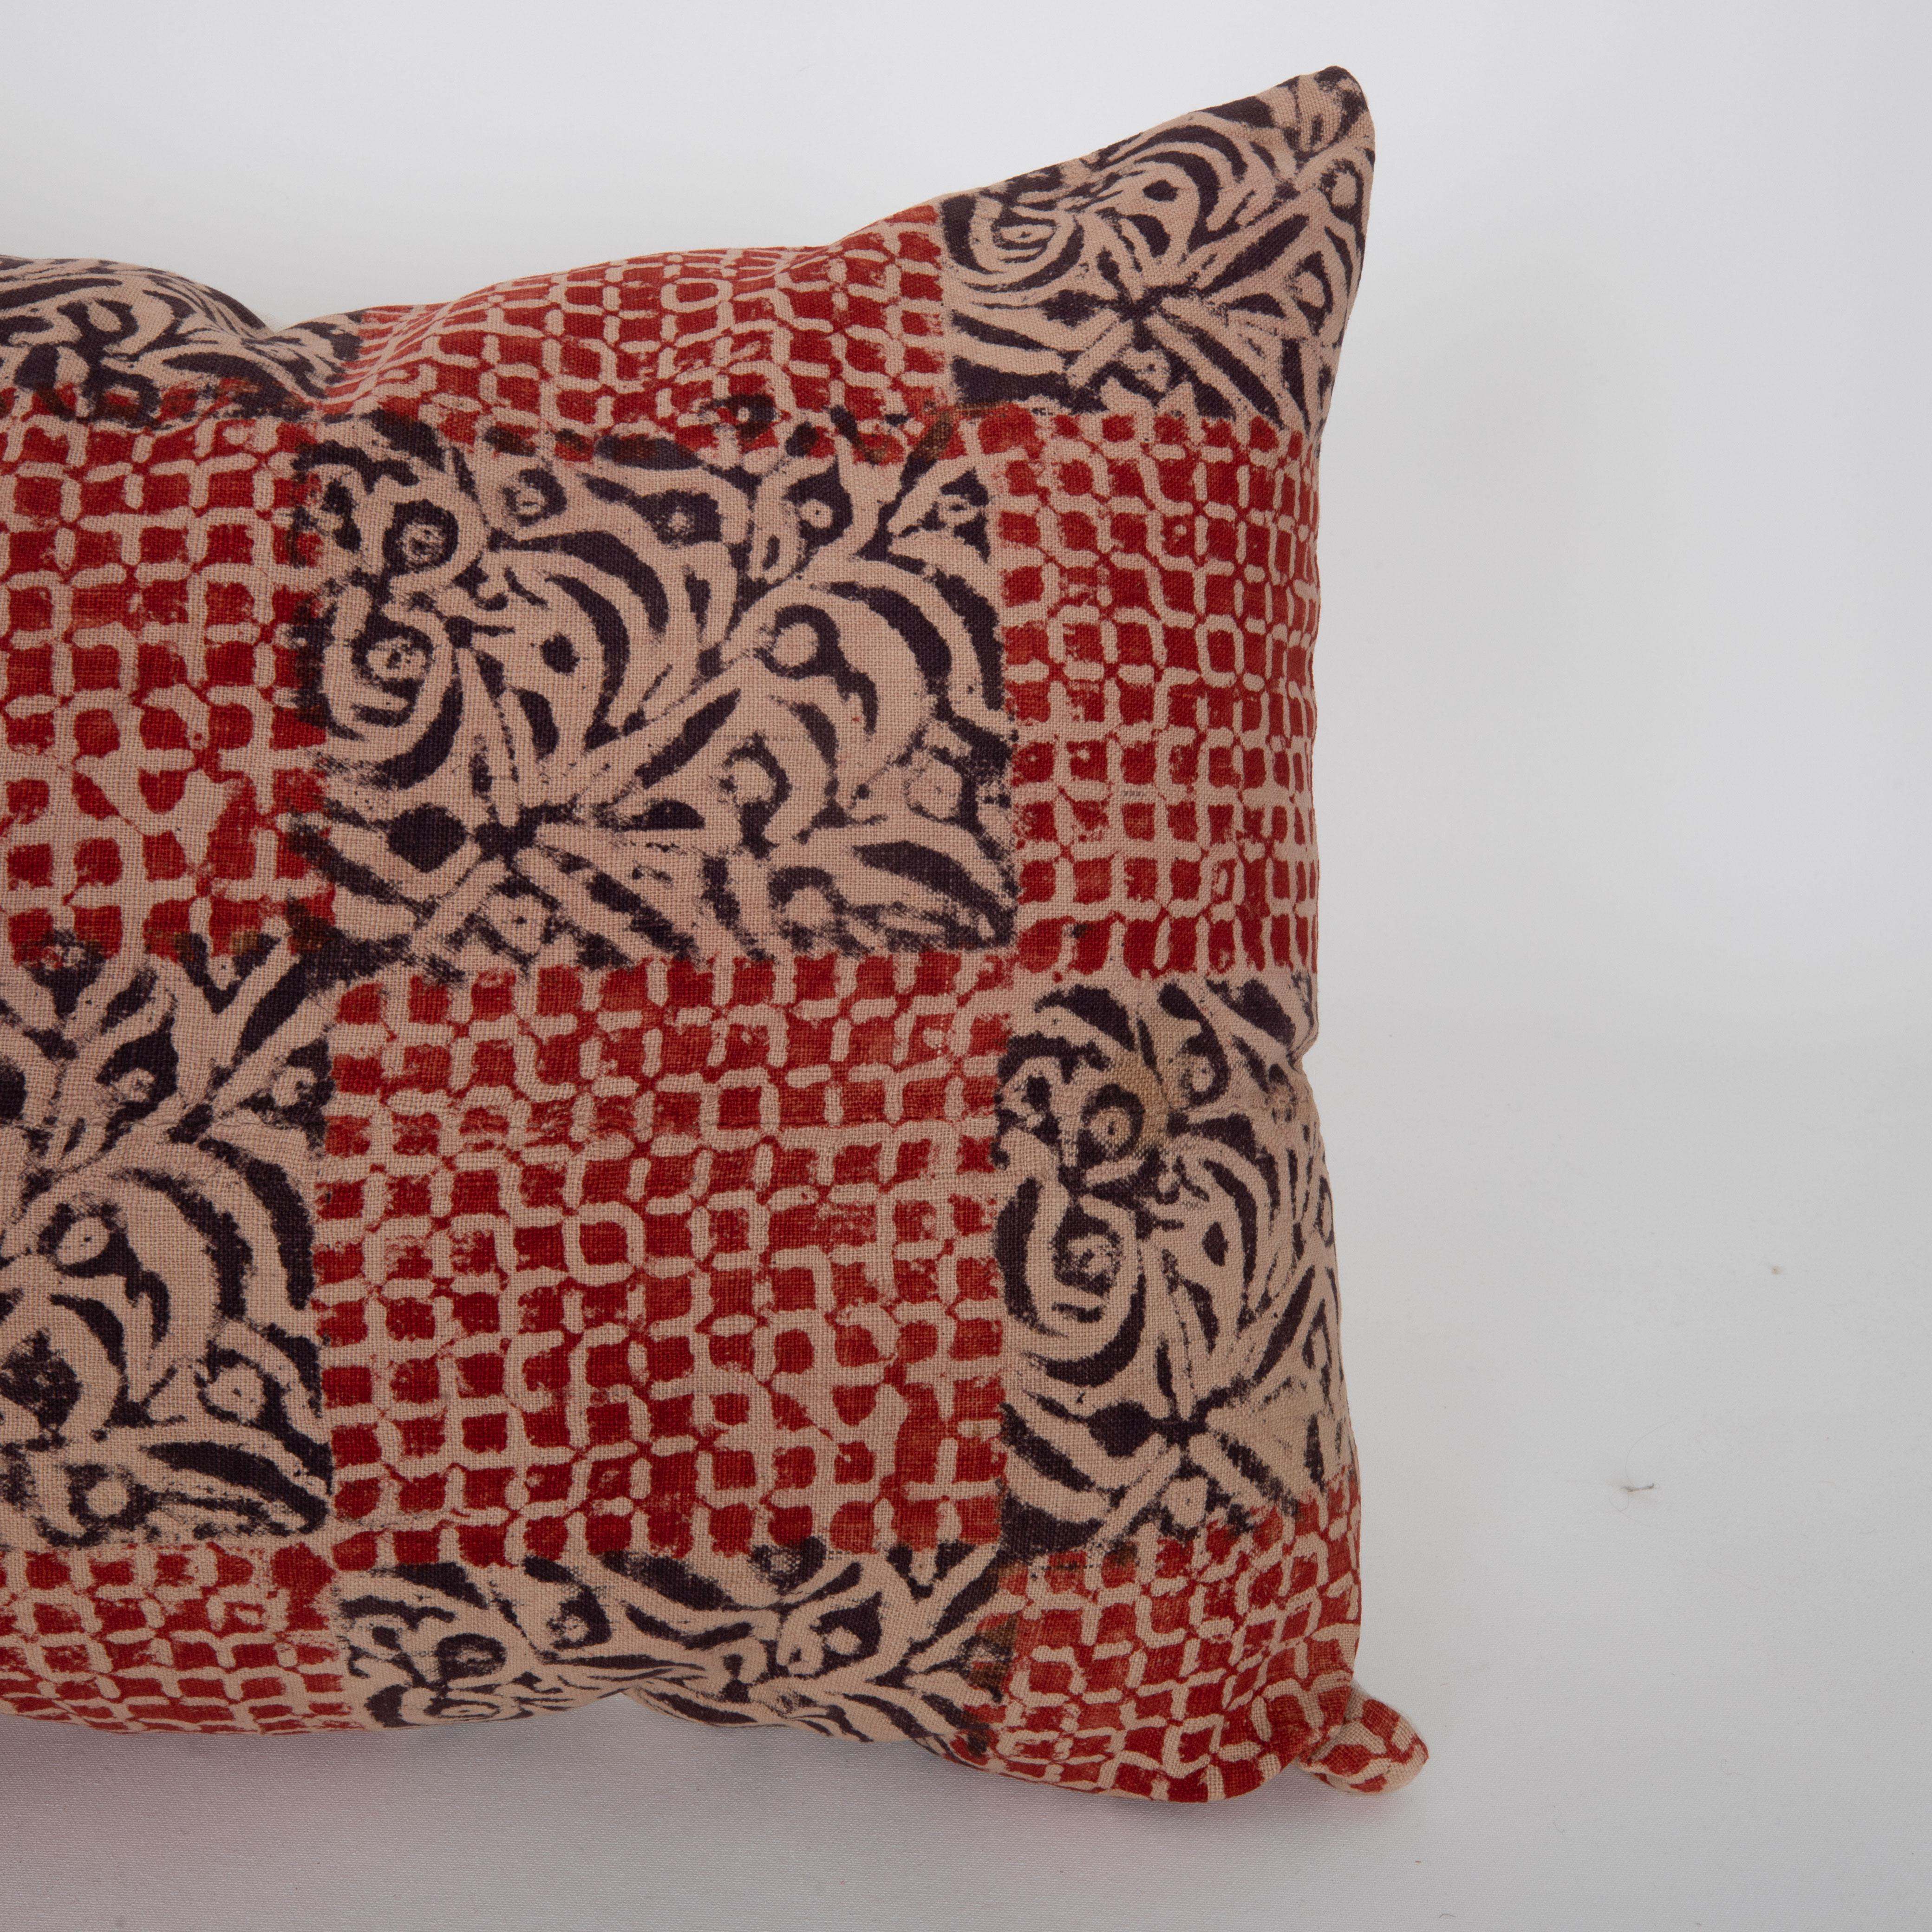 Kalamkari Cushion Cover Made From an Uzbek Hand Block Printed Panel For Sale